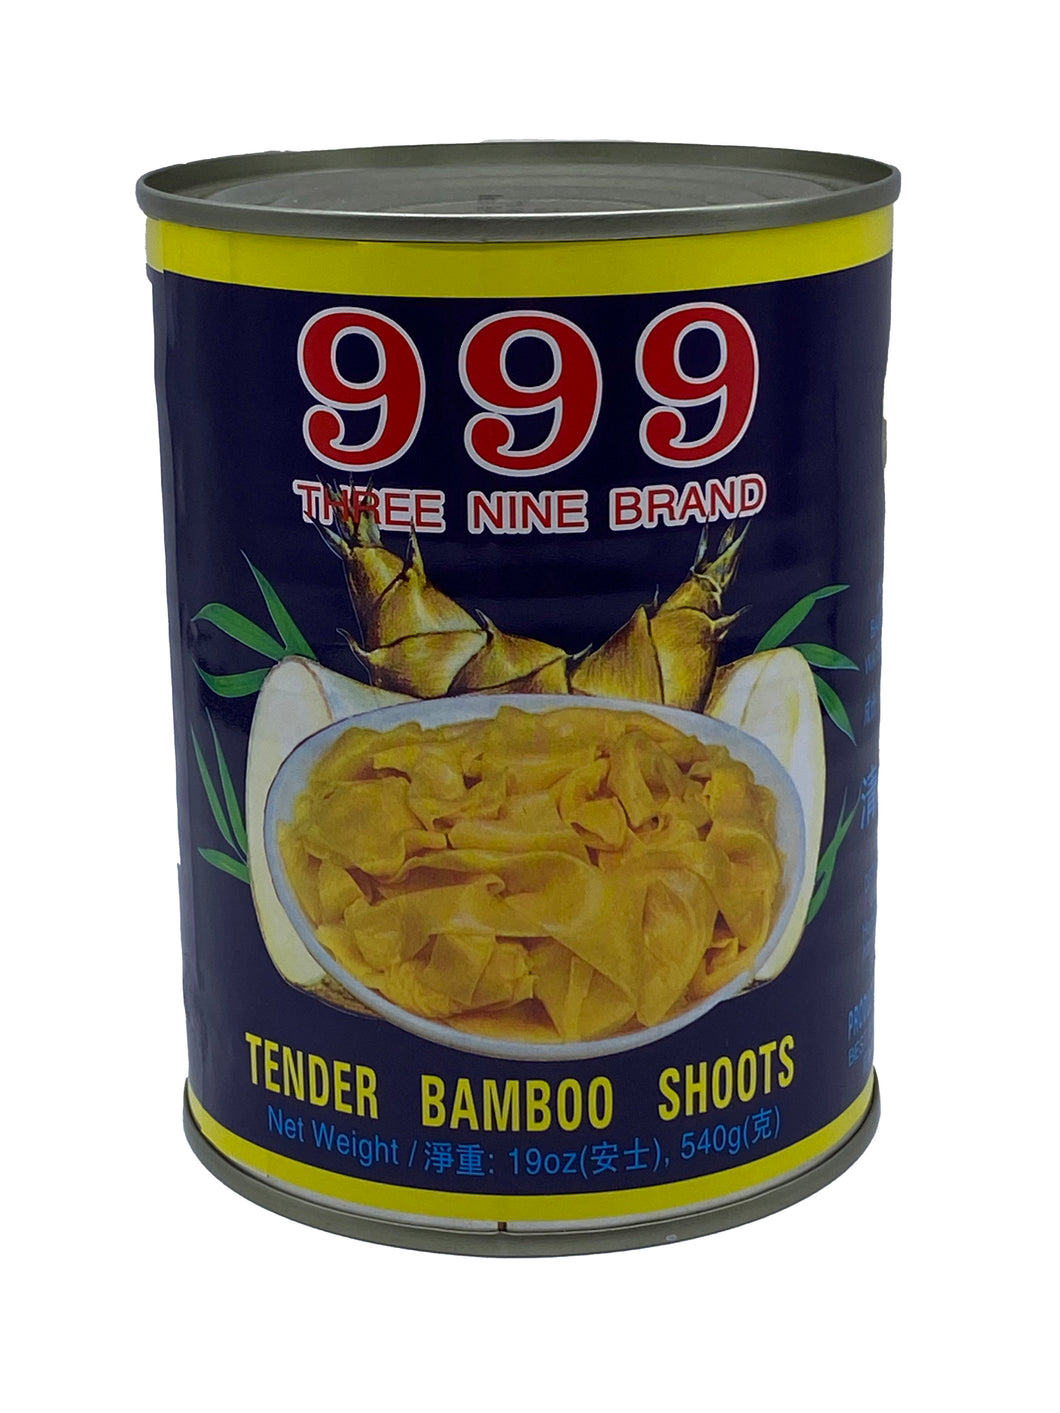 999 Tender Bamboo Shoots